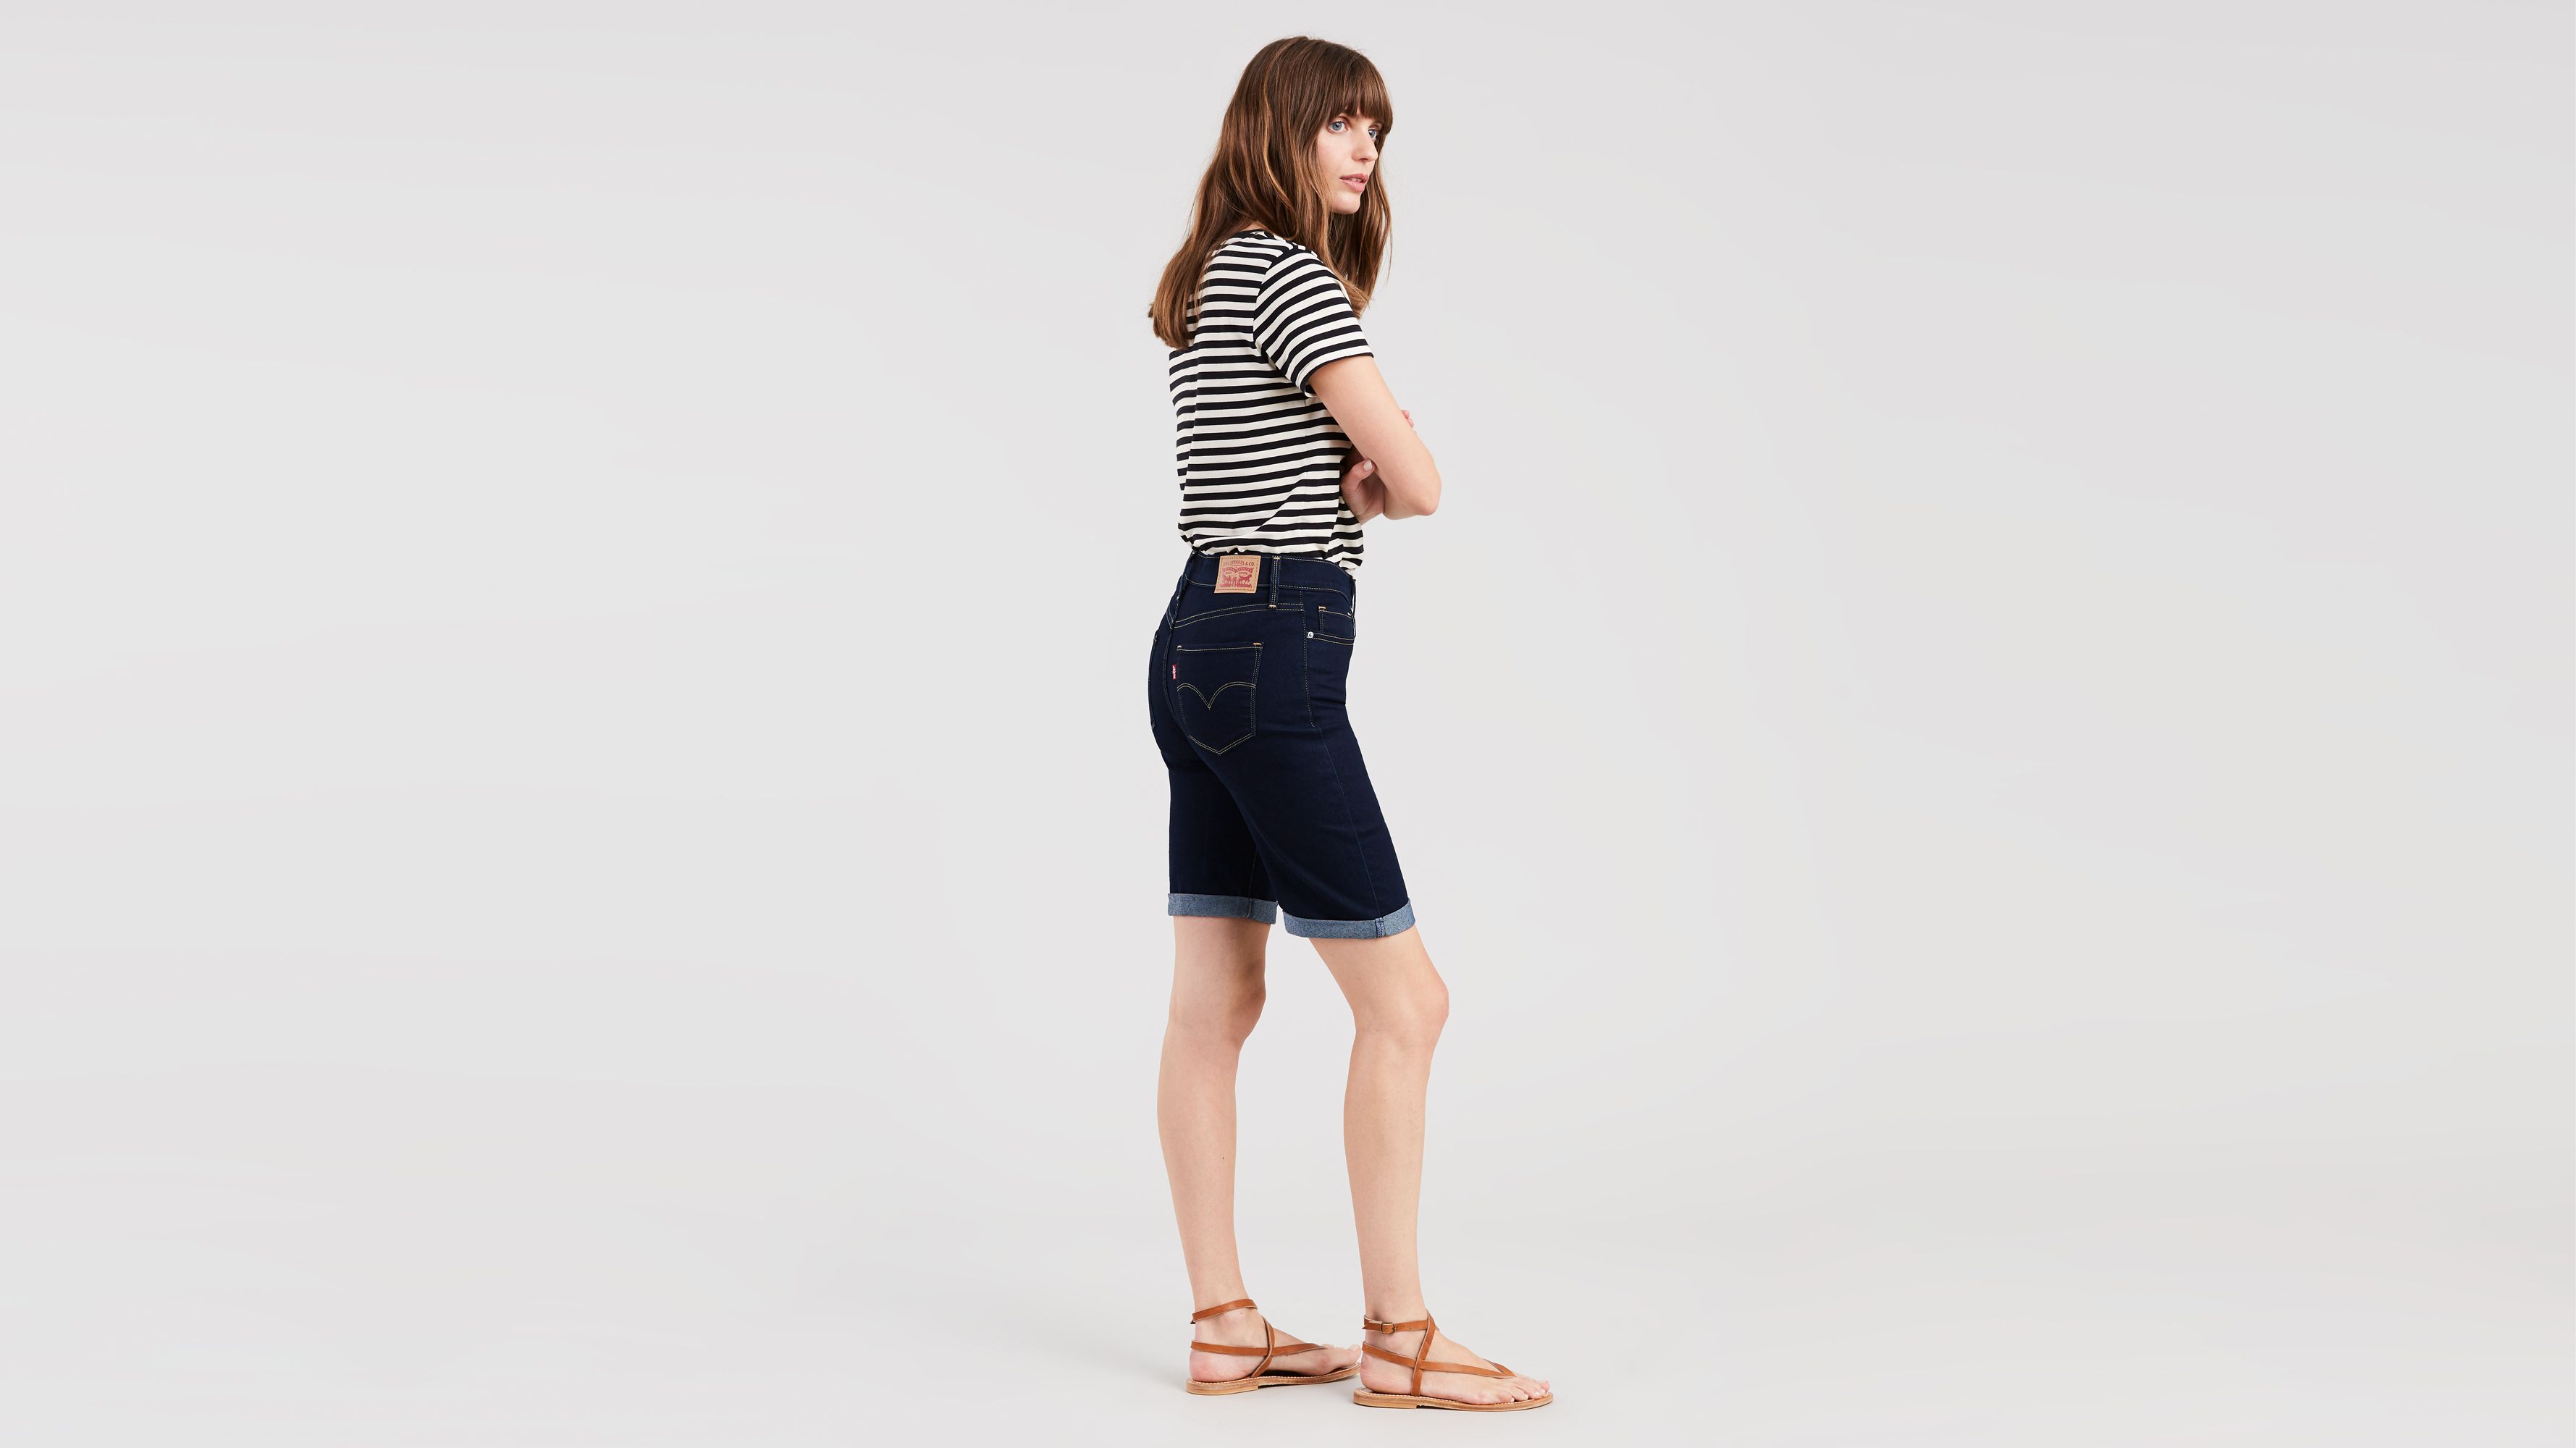 women's levi's bermuda jean shorts